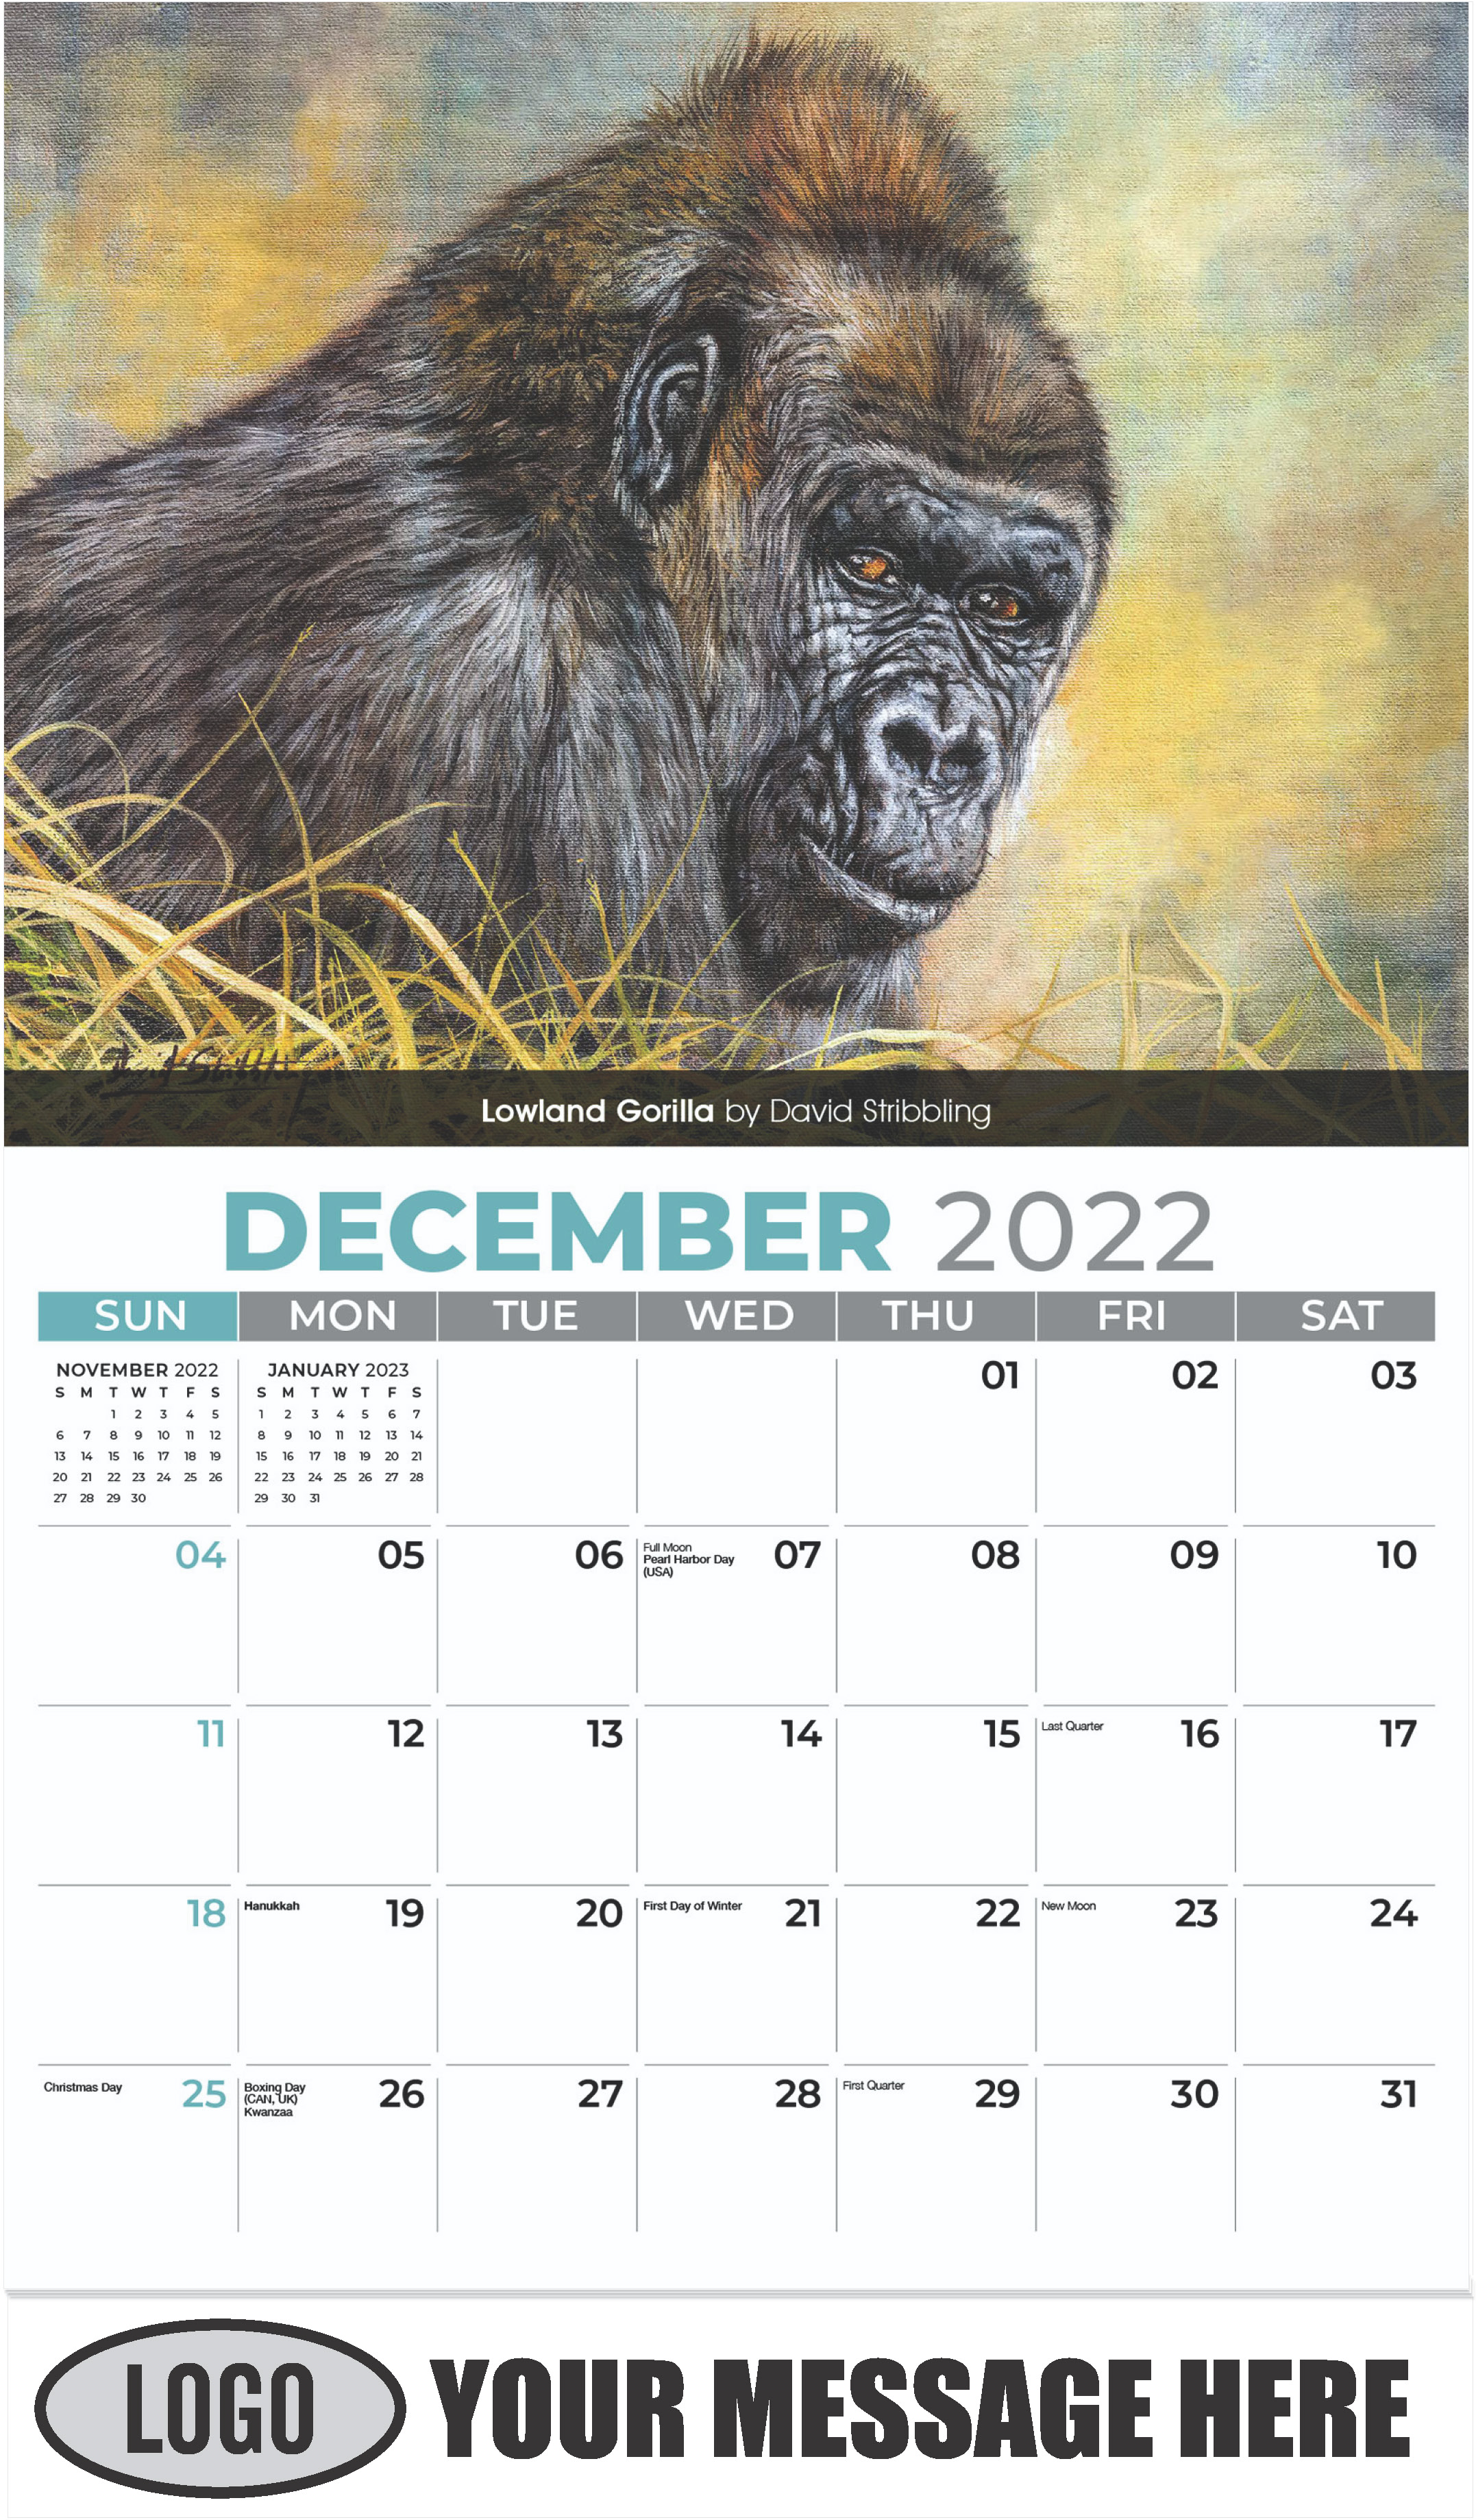 Lowland Gorilla by David Stribbling - December 2022 - Wildlife Portraits 2023 Promotional Calendar